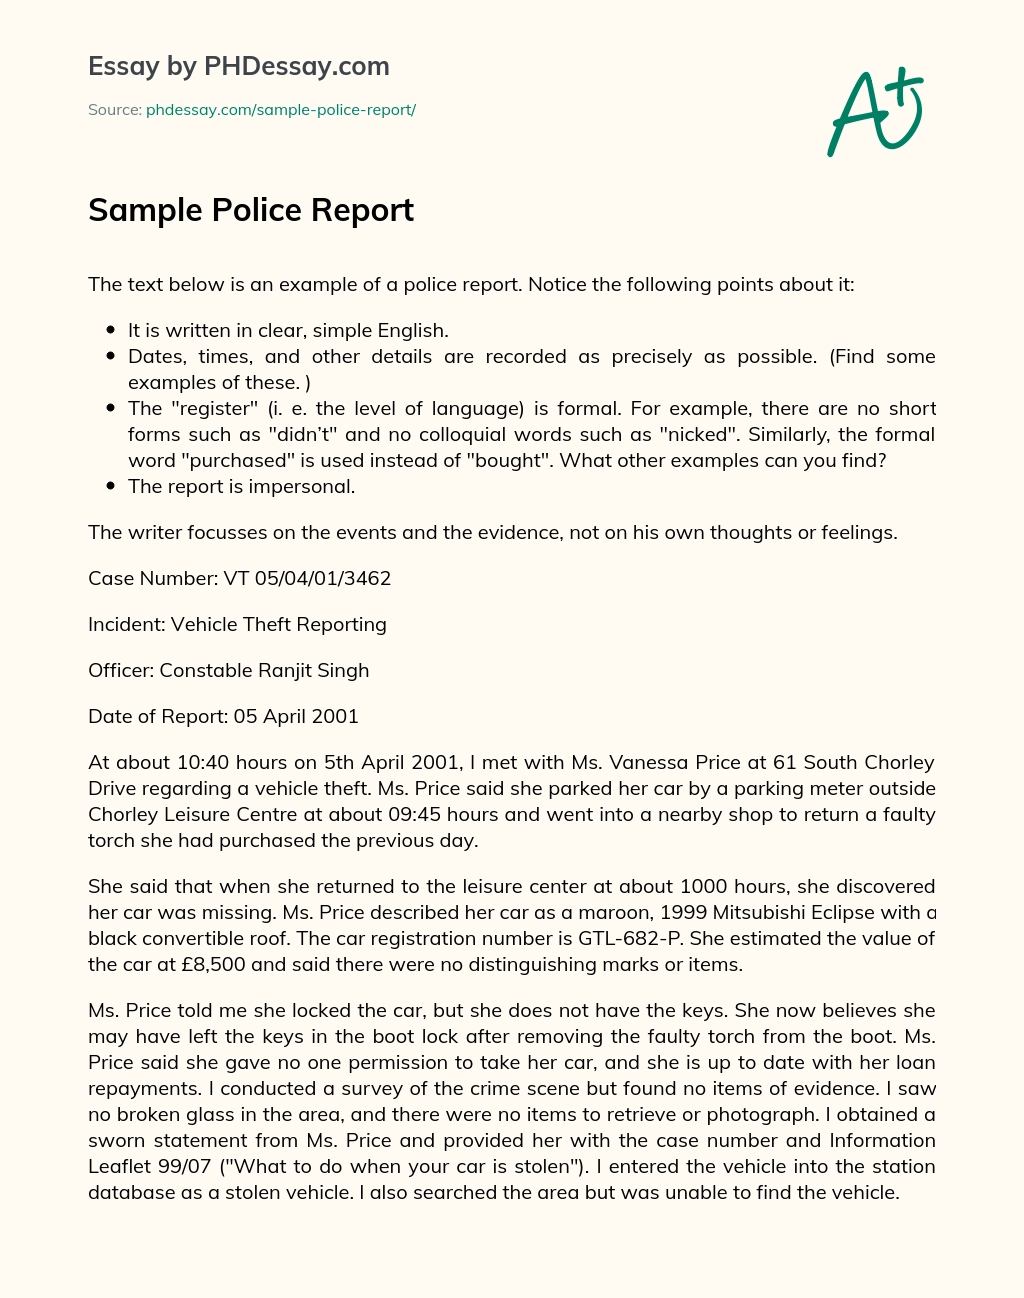 Sample Police Report essay